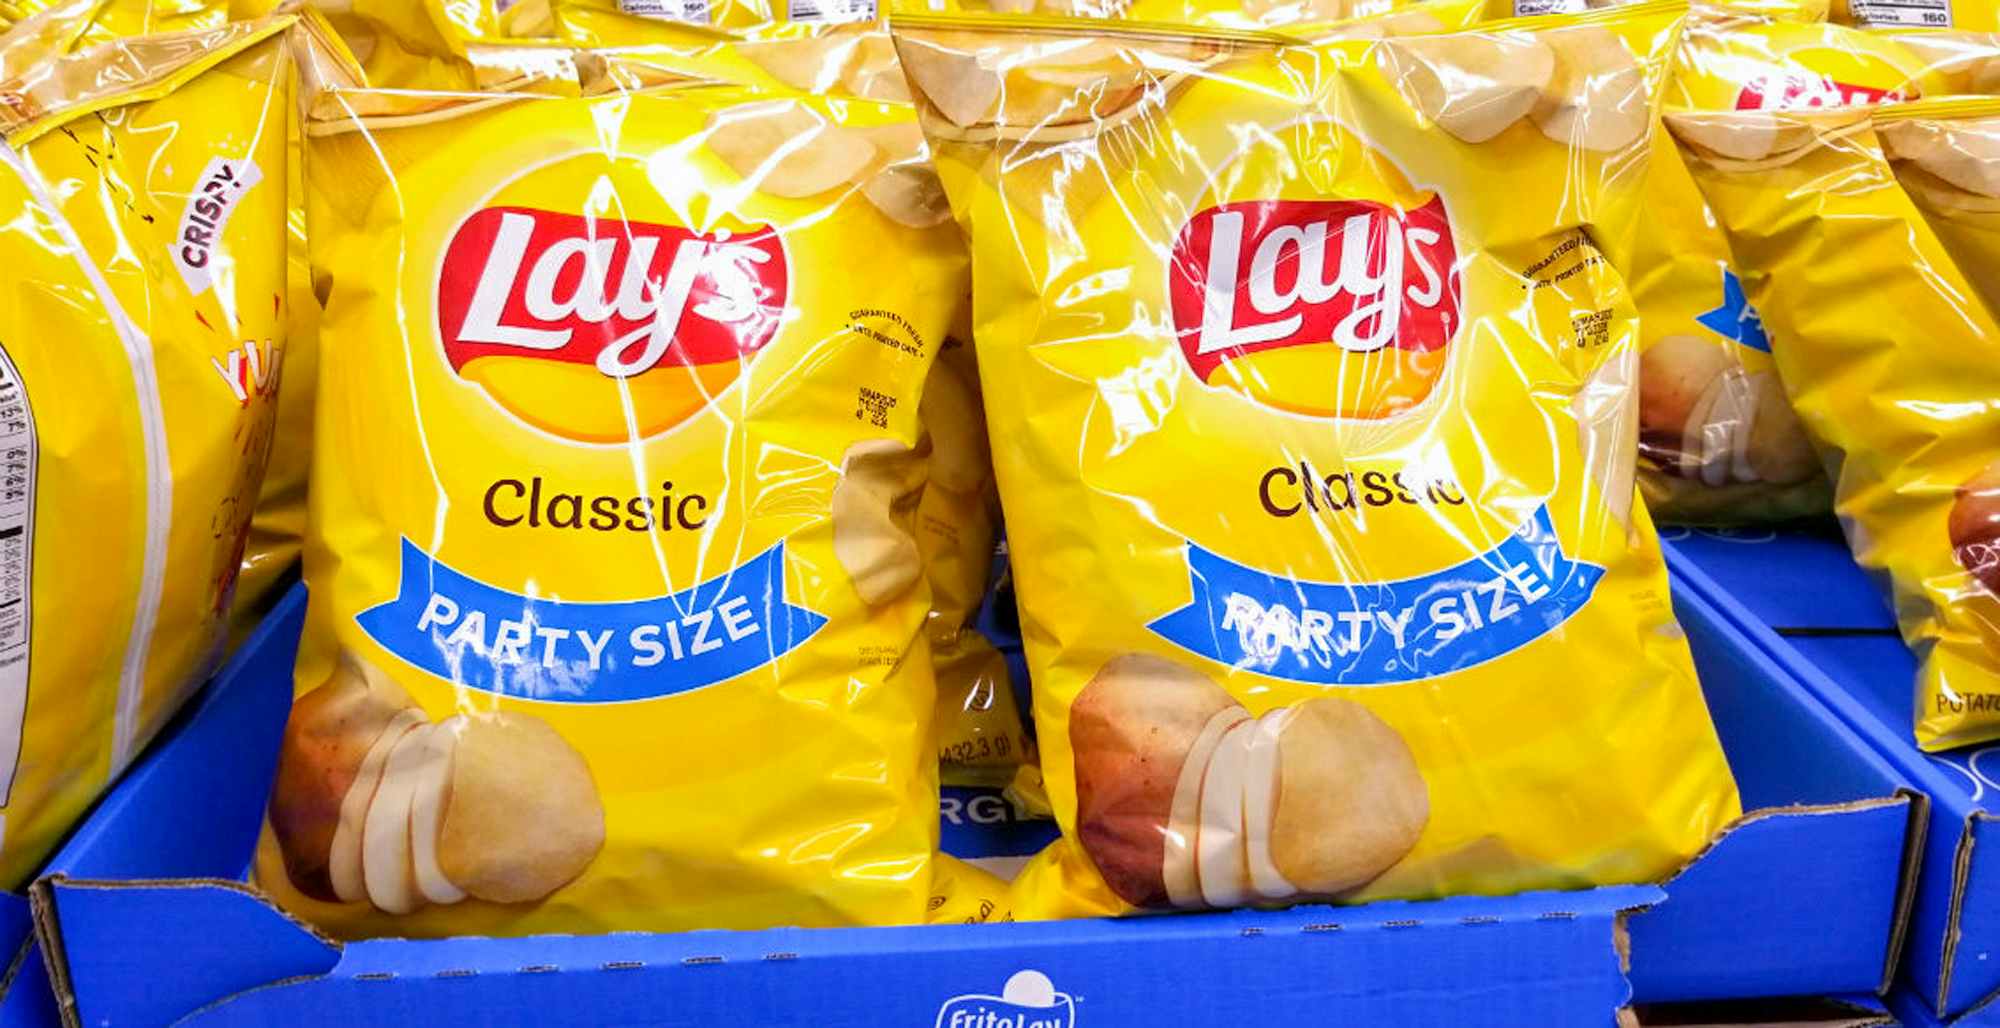 lays party size potato chips sitting on a shelf